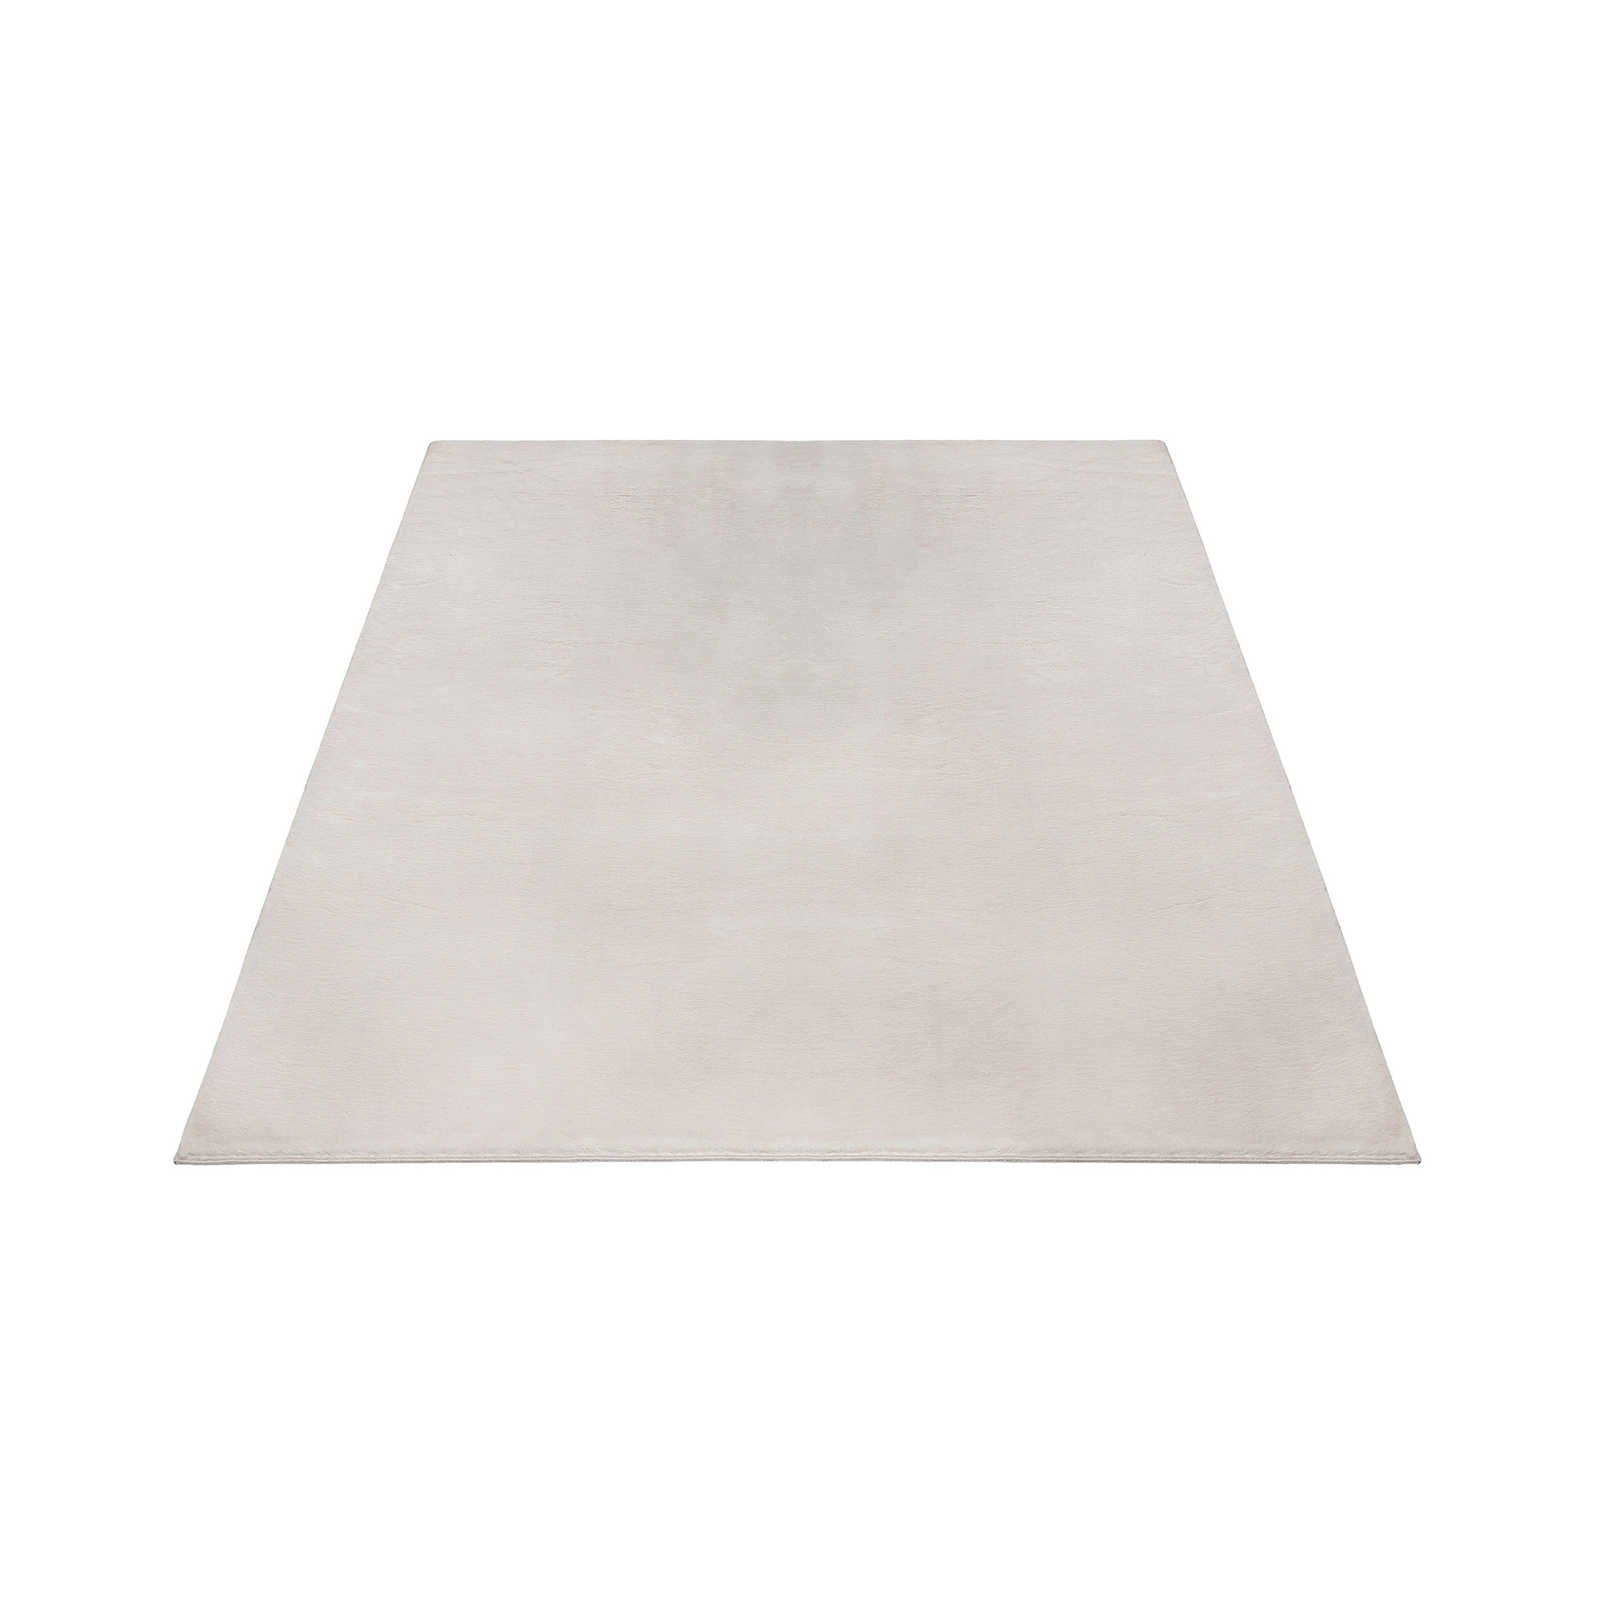 Cuddly soft high pile carpet in light beige - 230 x 160 cm
